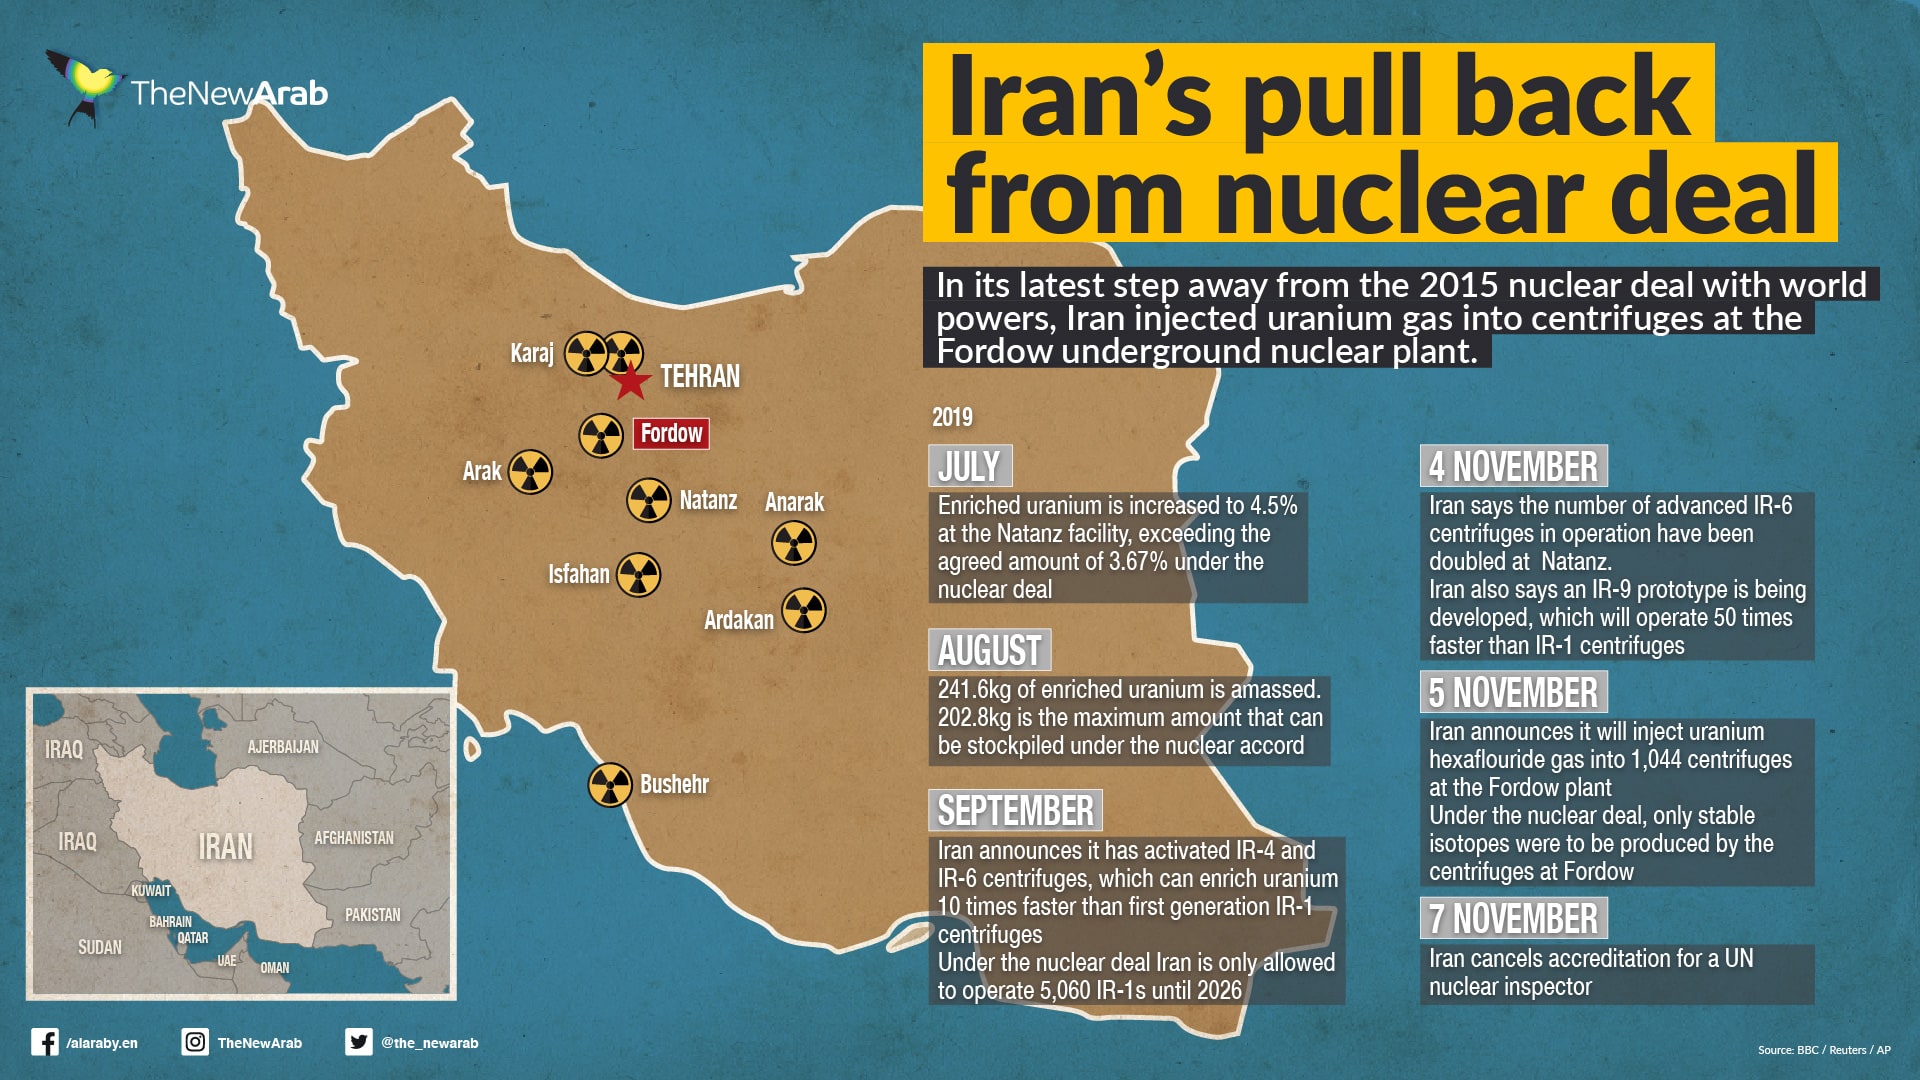 Iran pull back - nuclear deal_1920x1080.jpg